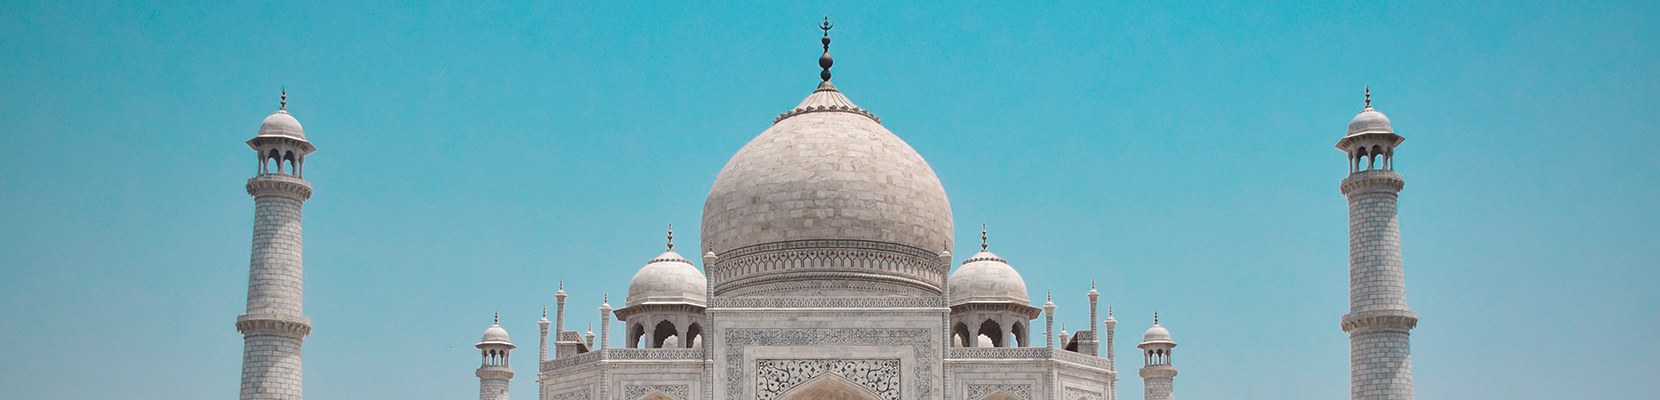 Taj Mahal with blue sky behind